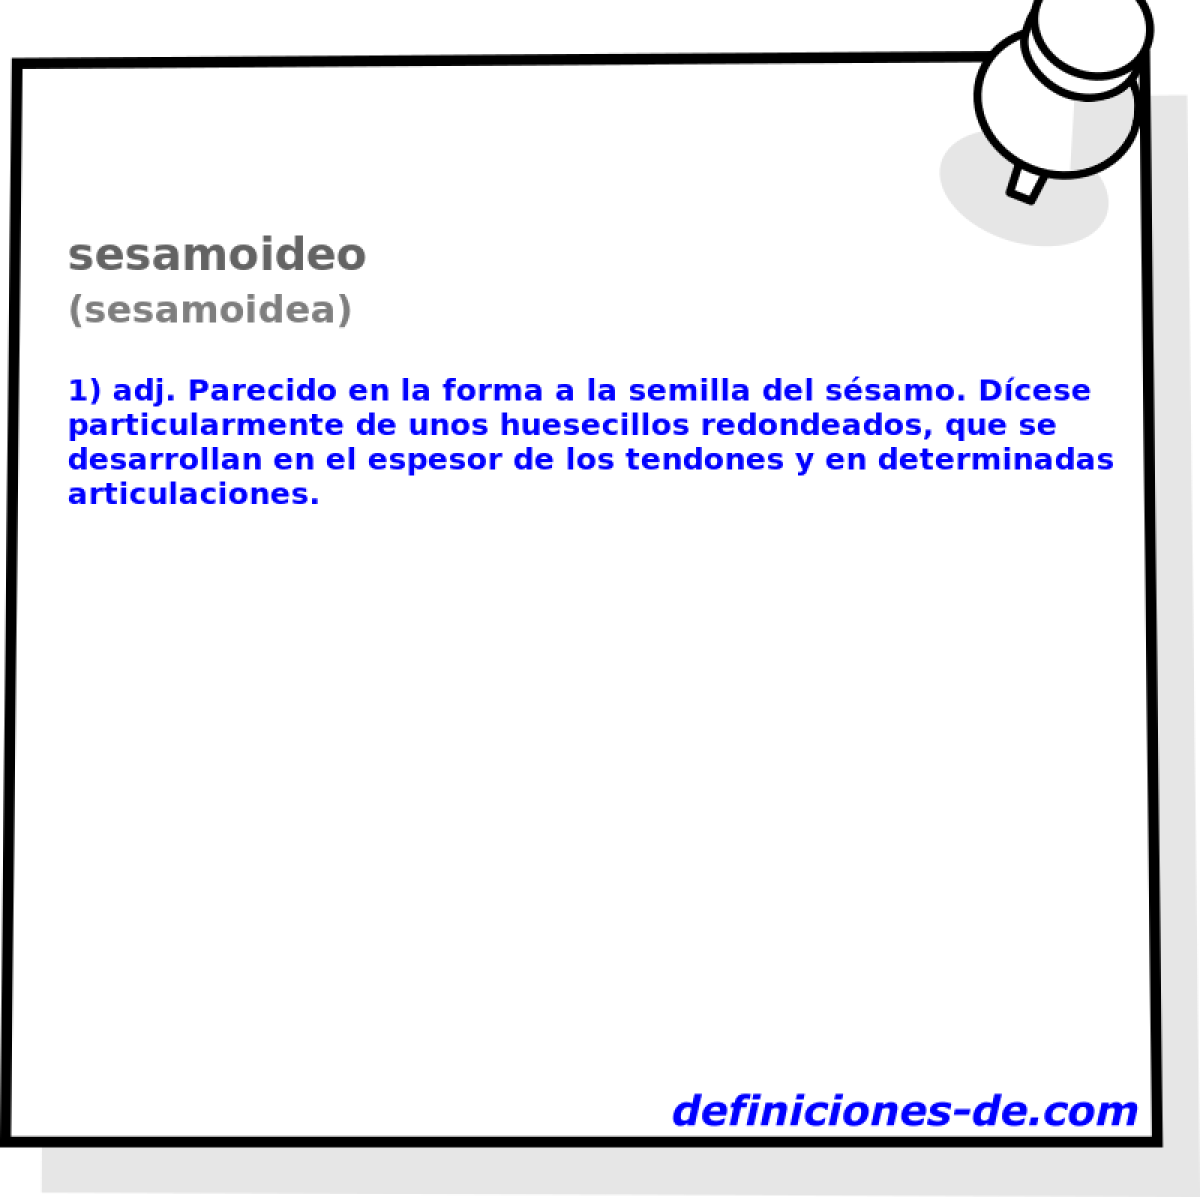 sesamoideo (sesamoidea)